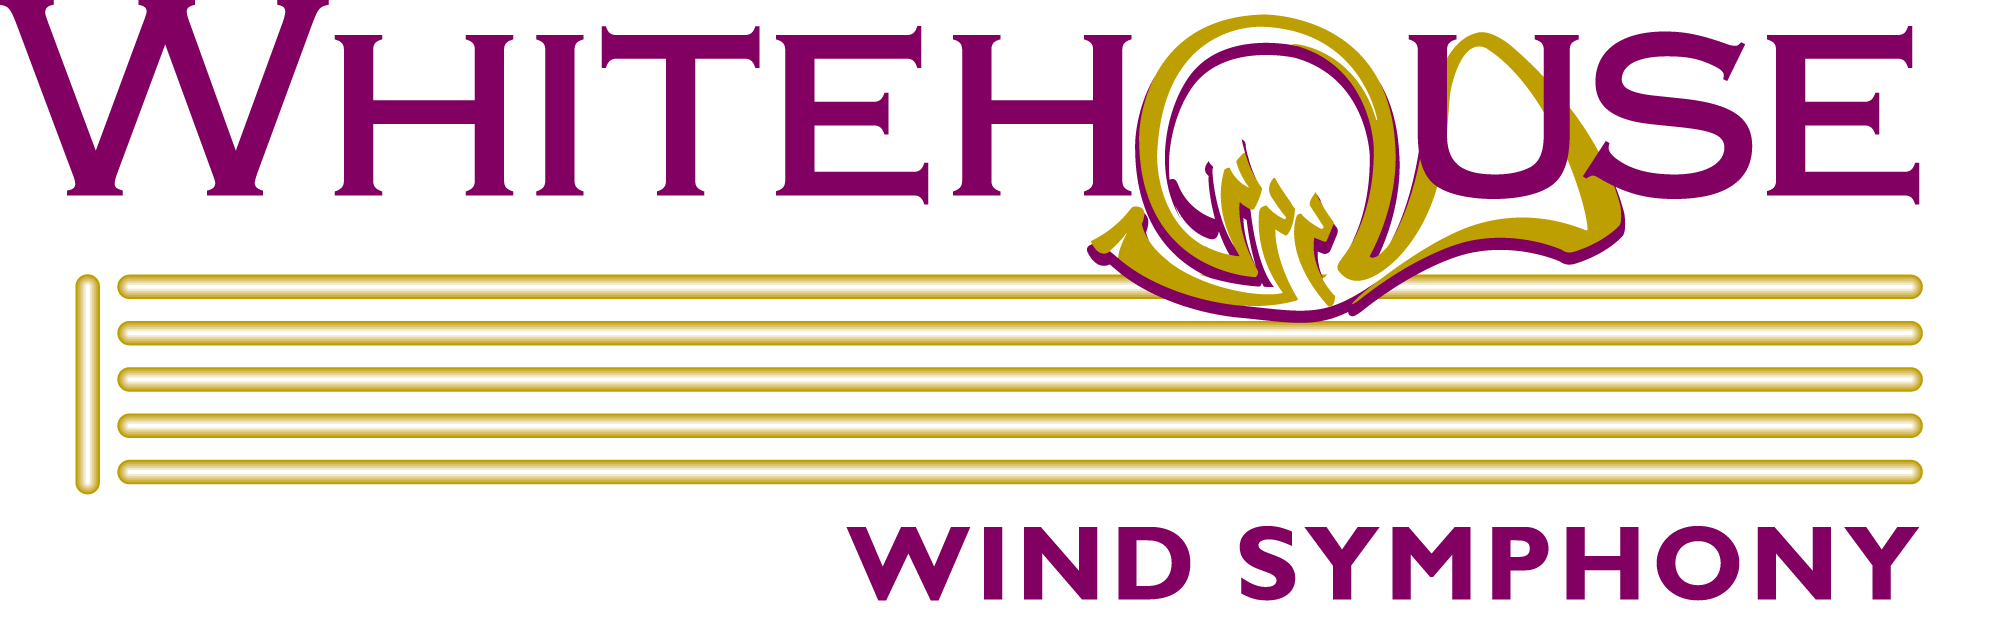 Whitehouse Wind Symphony Logo